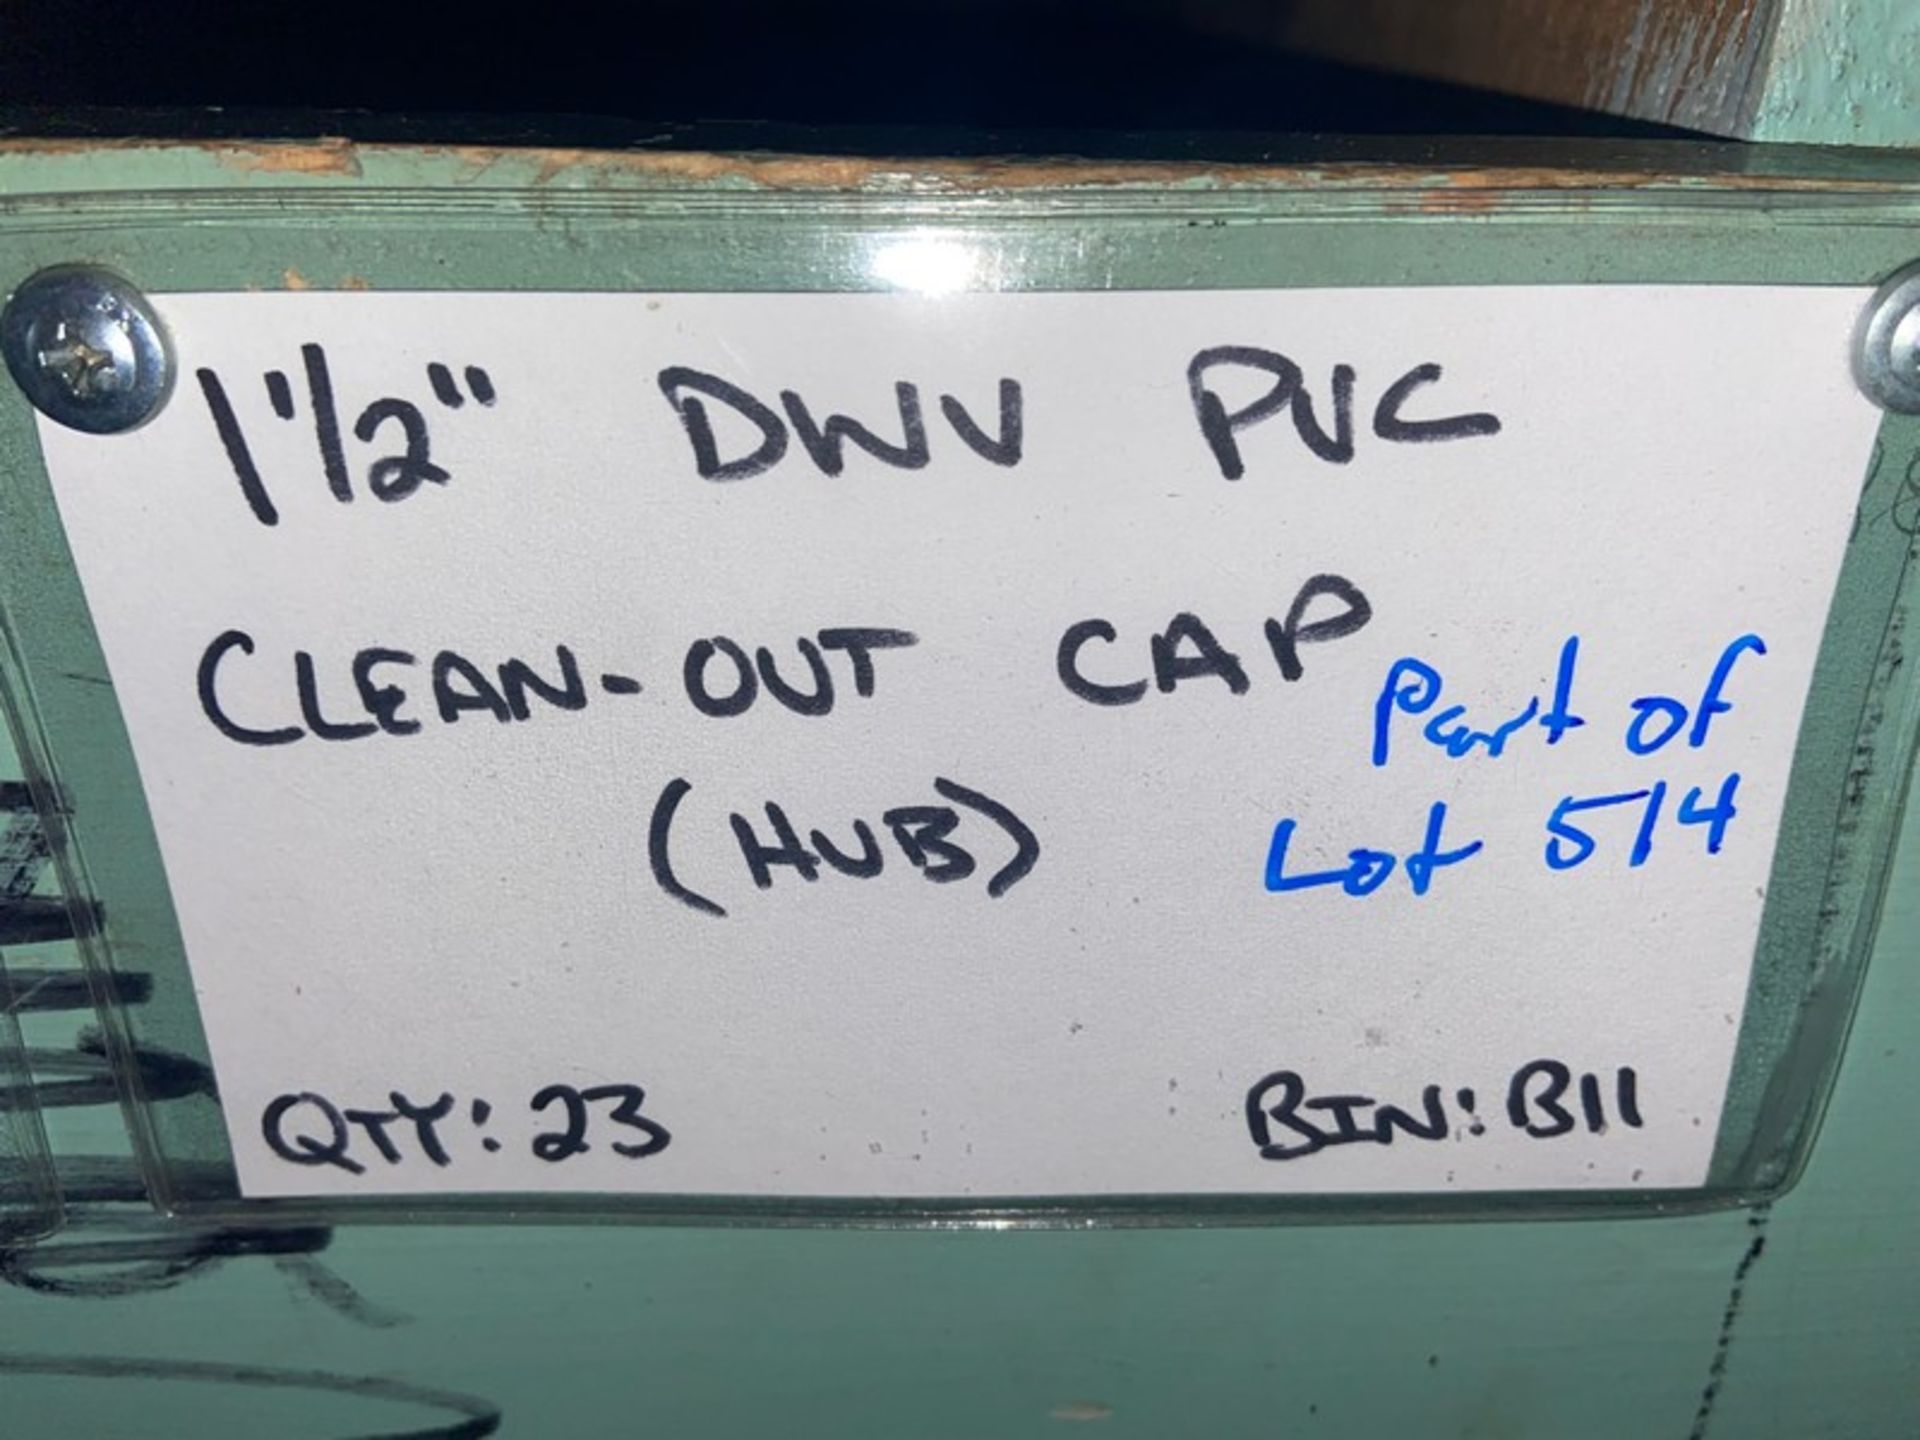 (5) 1 1/2” DWV PVC Clean-out CAP (STREET) (Bin: B11), Includes (23) 1 1/2” DWV PVC Clean-out CAP ( - Image 9 of 9